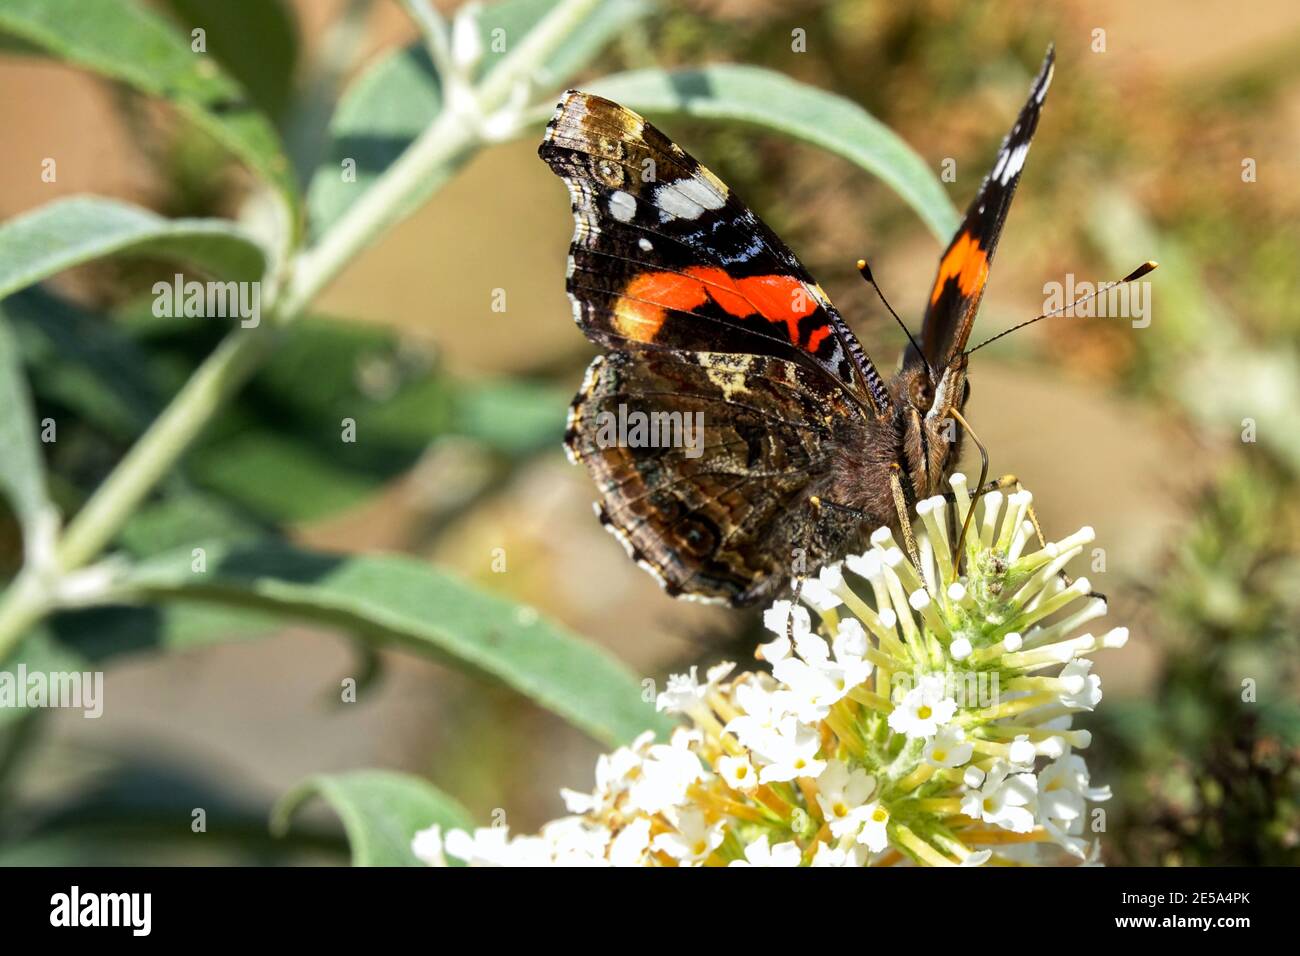 Red admiral butterfly Vanessa atalanta on flower Butterfly bush flowering shrub Stock Photo